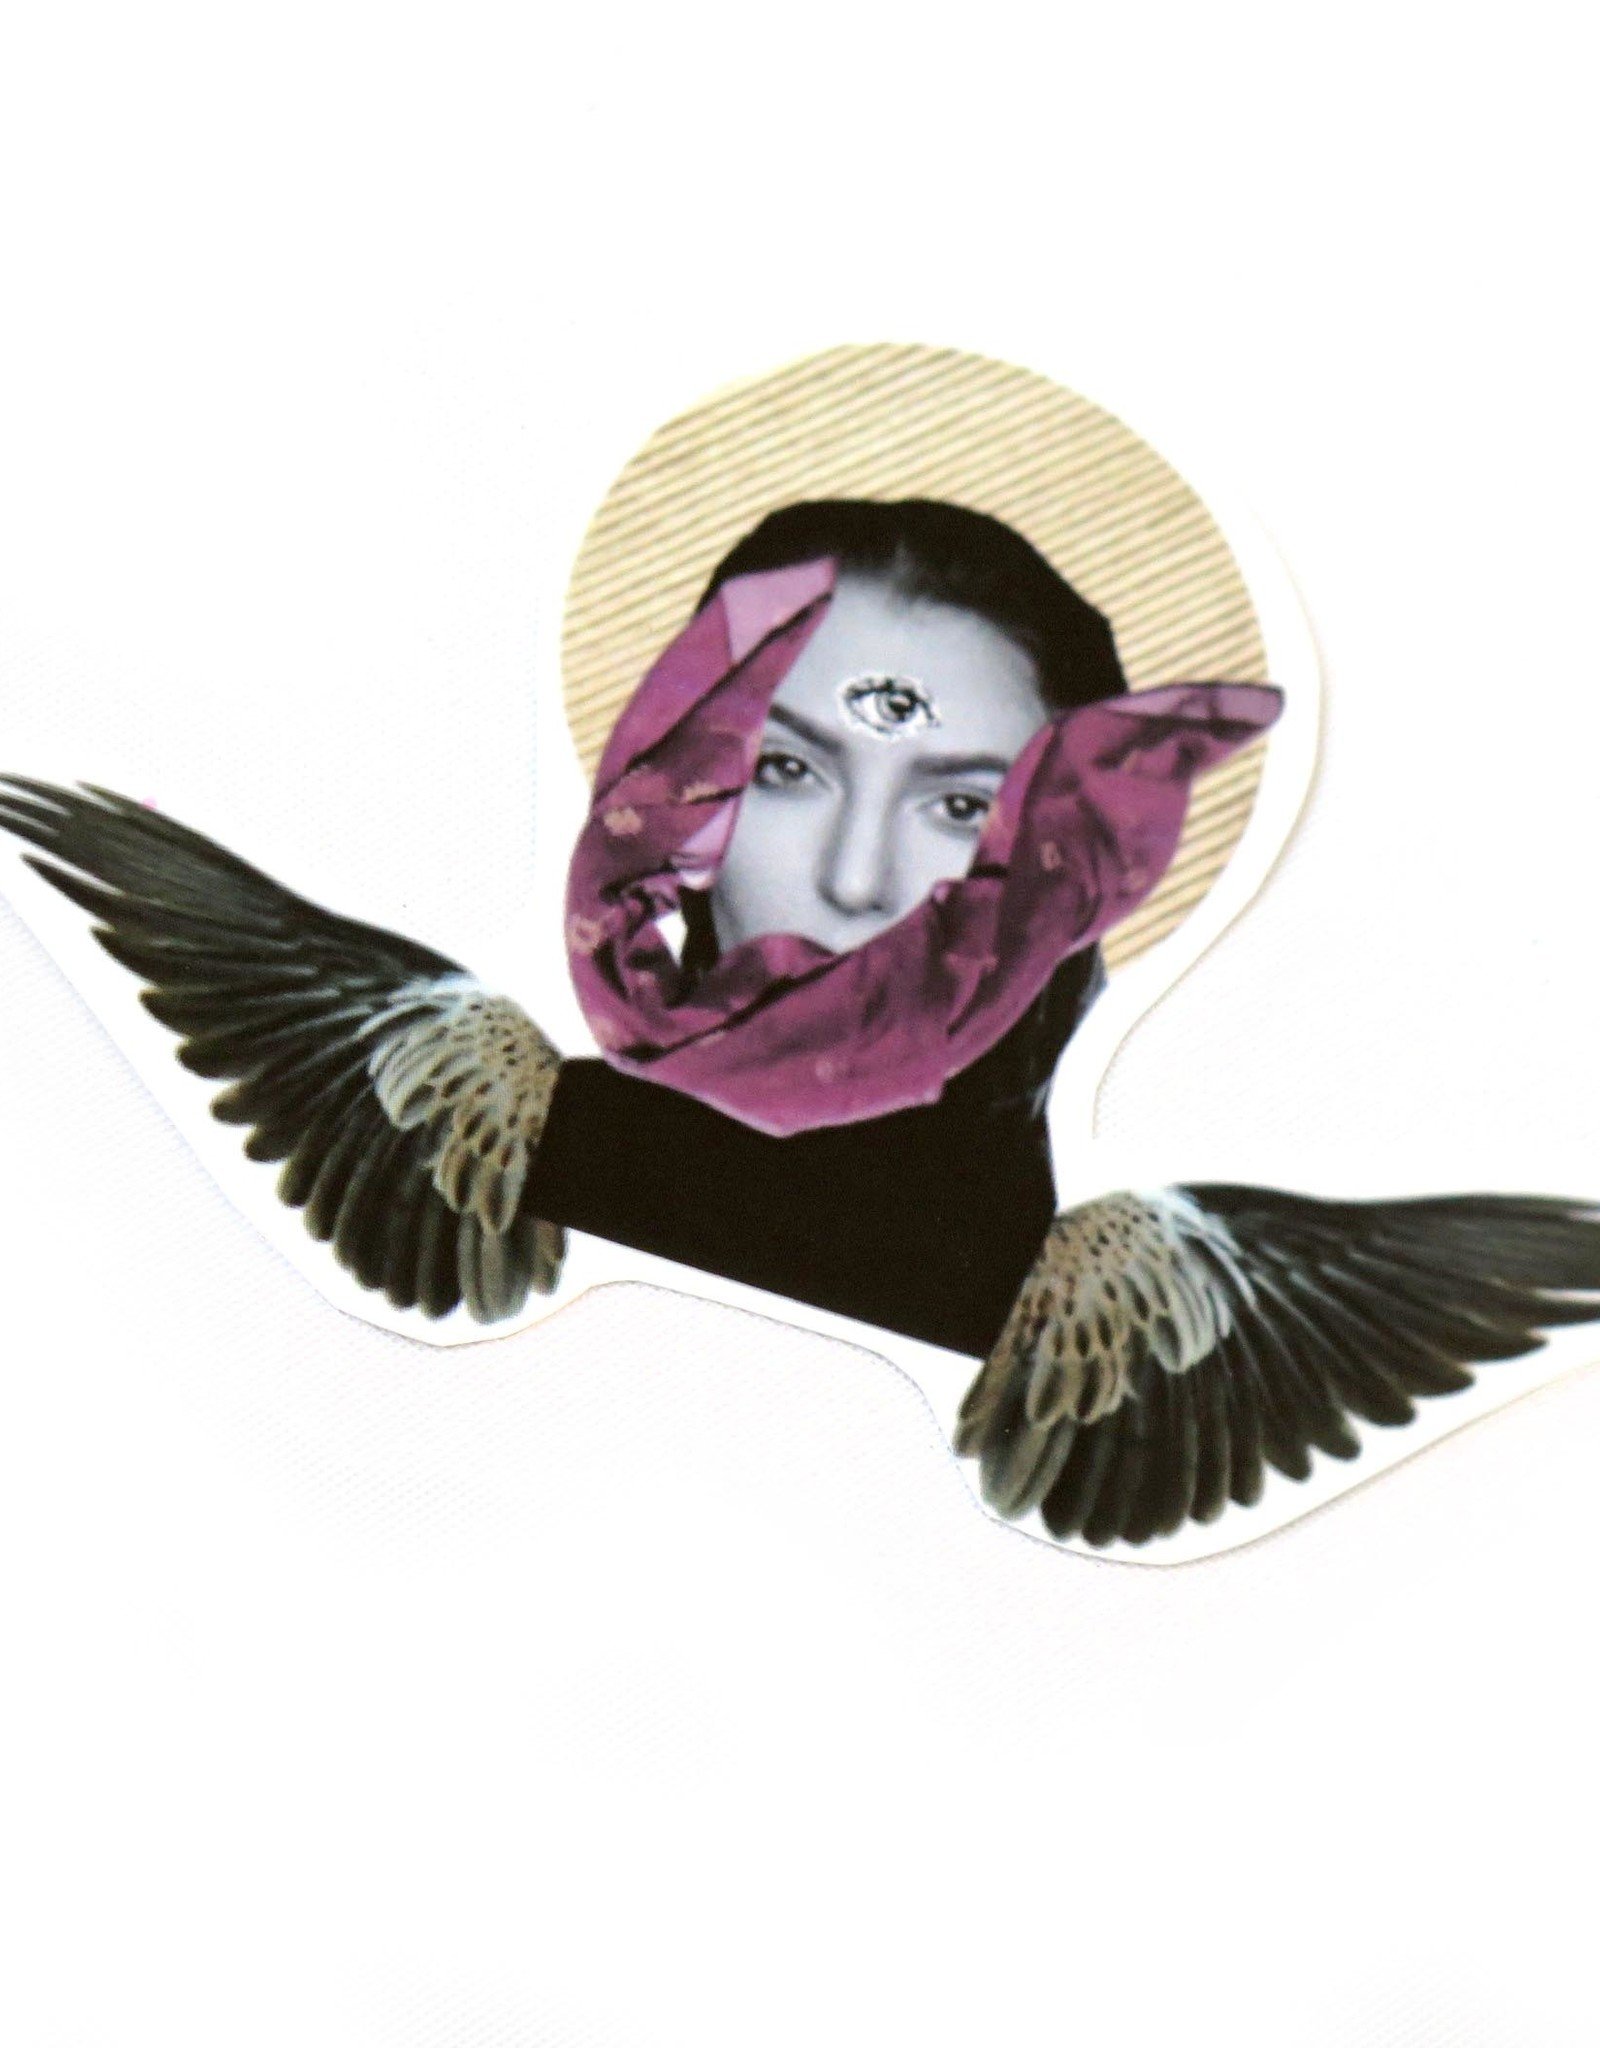 Lizzie Monsreal “Flying Soul” (small) sticker by Lizzie Monsreal